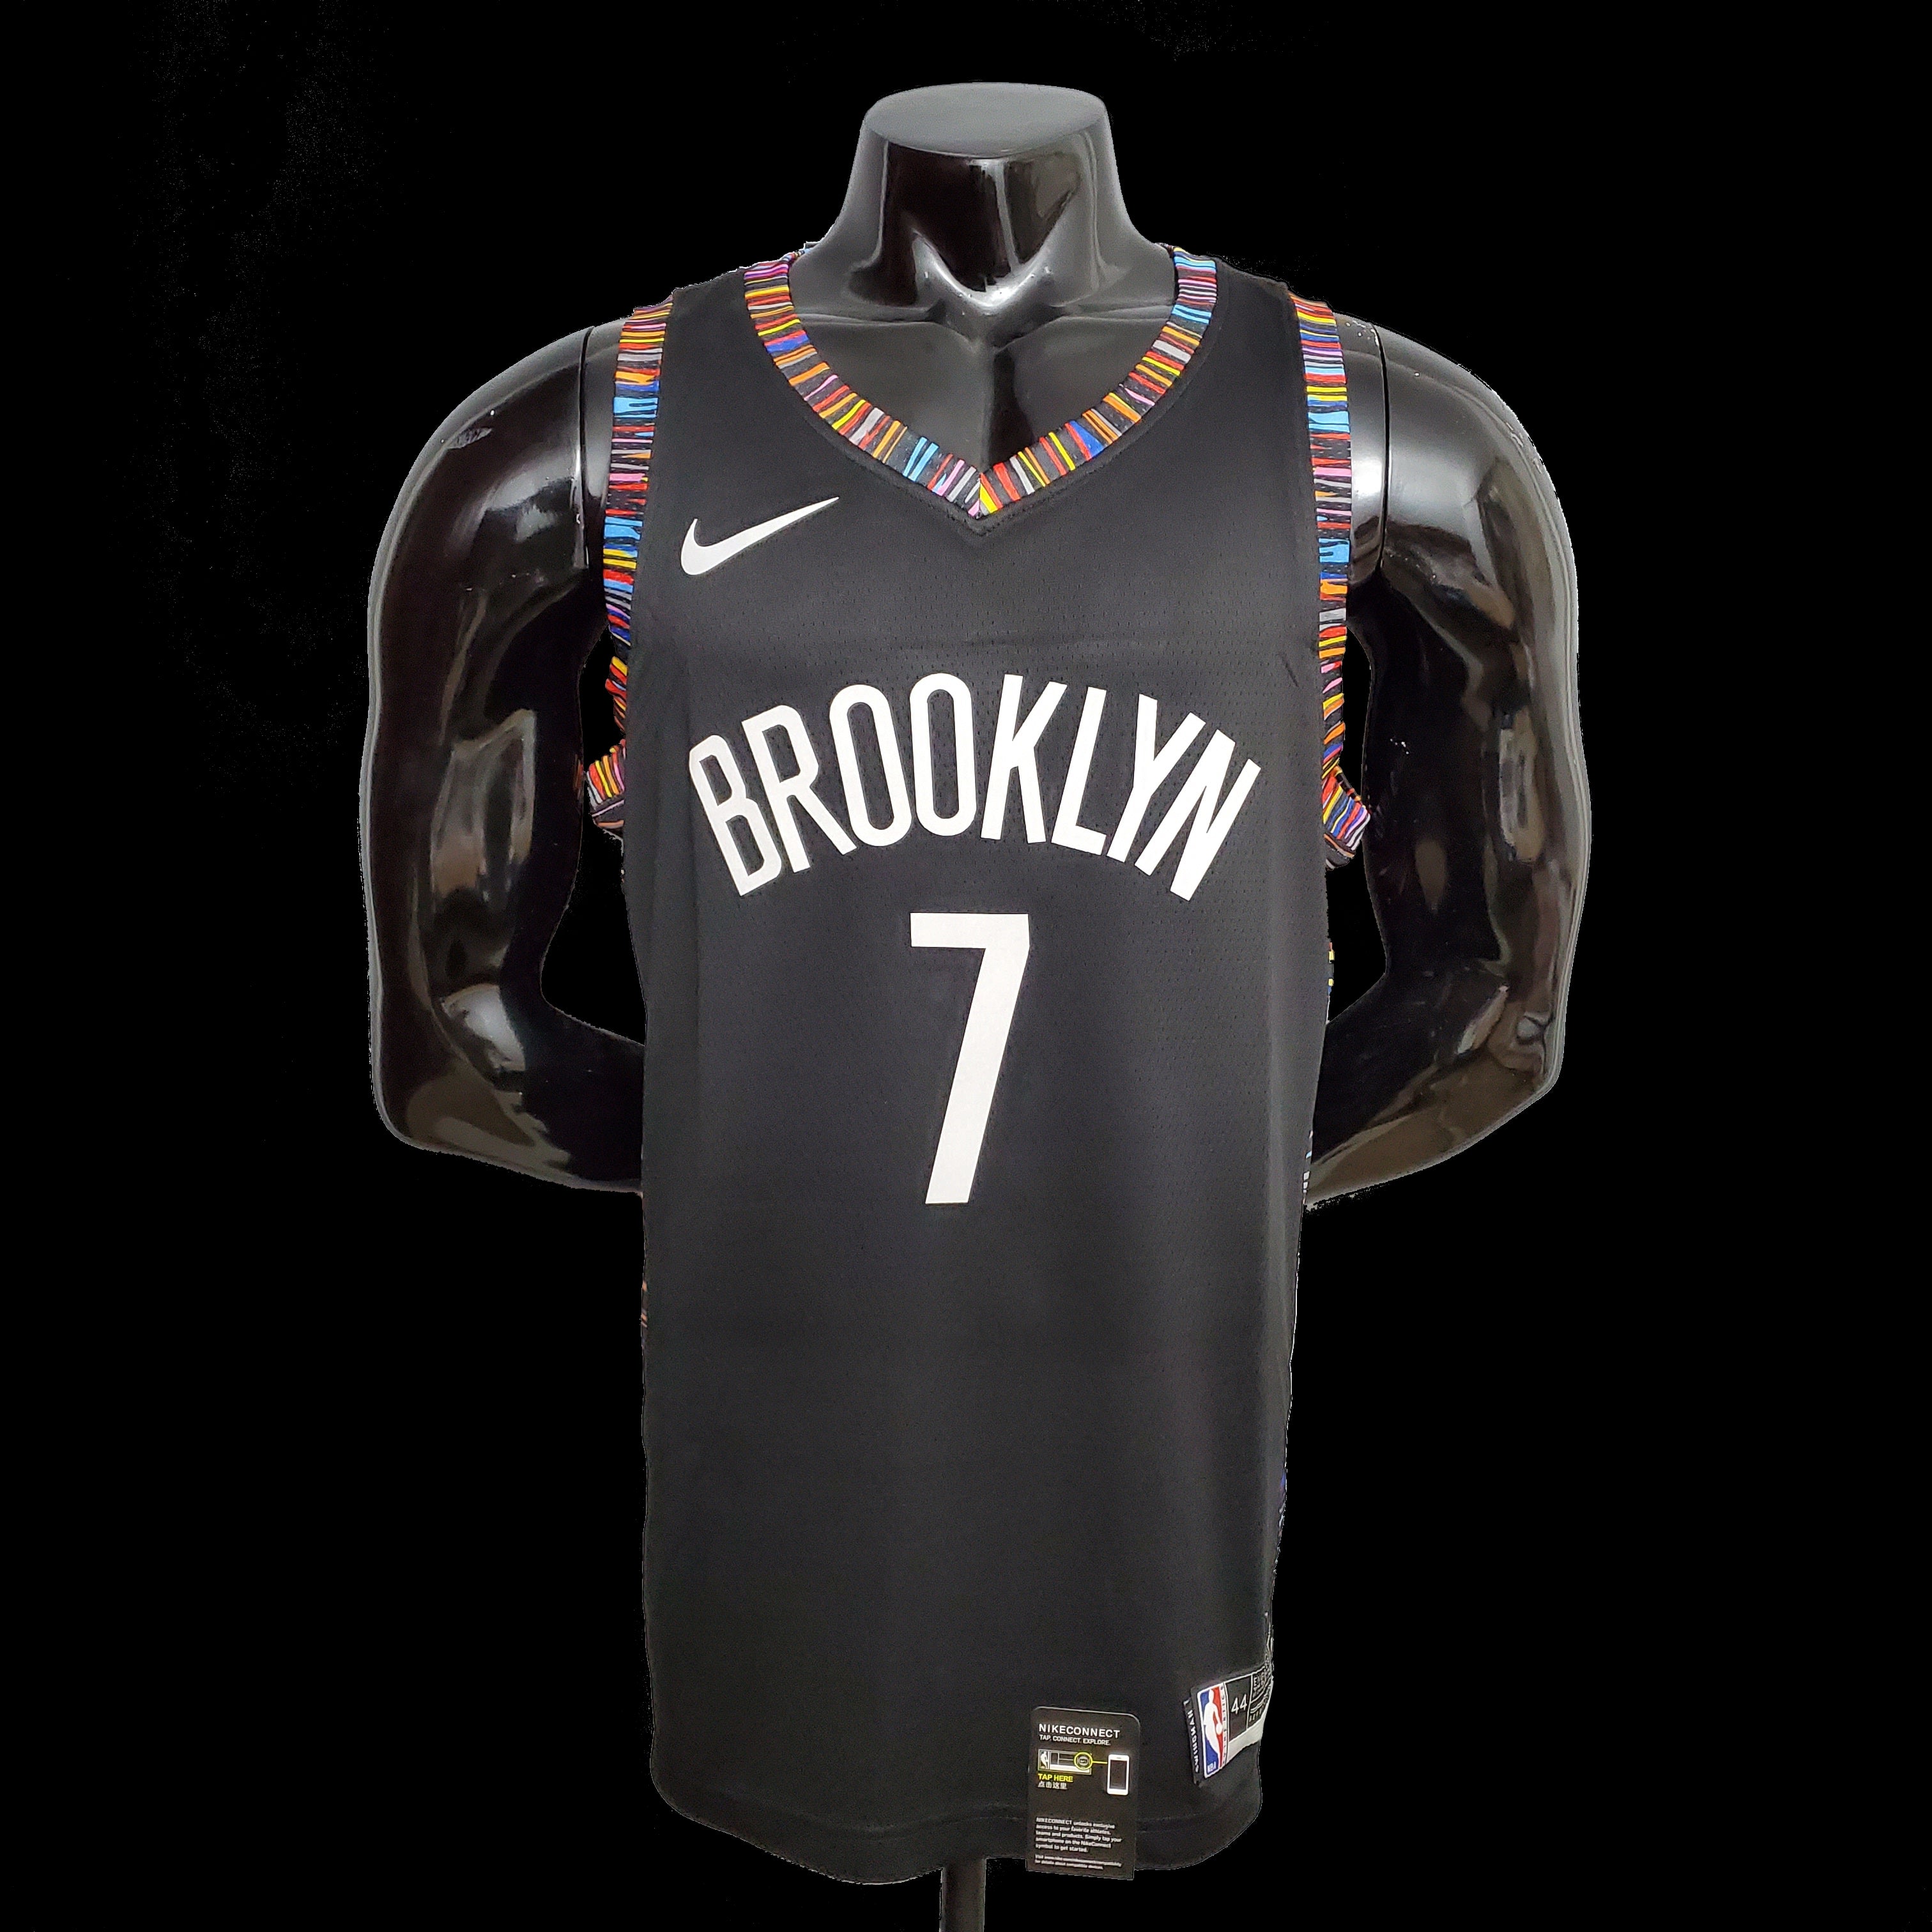 Nike Brooklyn Nets Authentic jersey 2020-2021 season Kevin Durant 